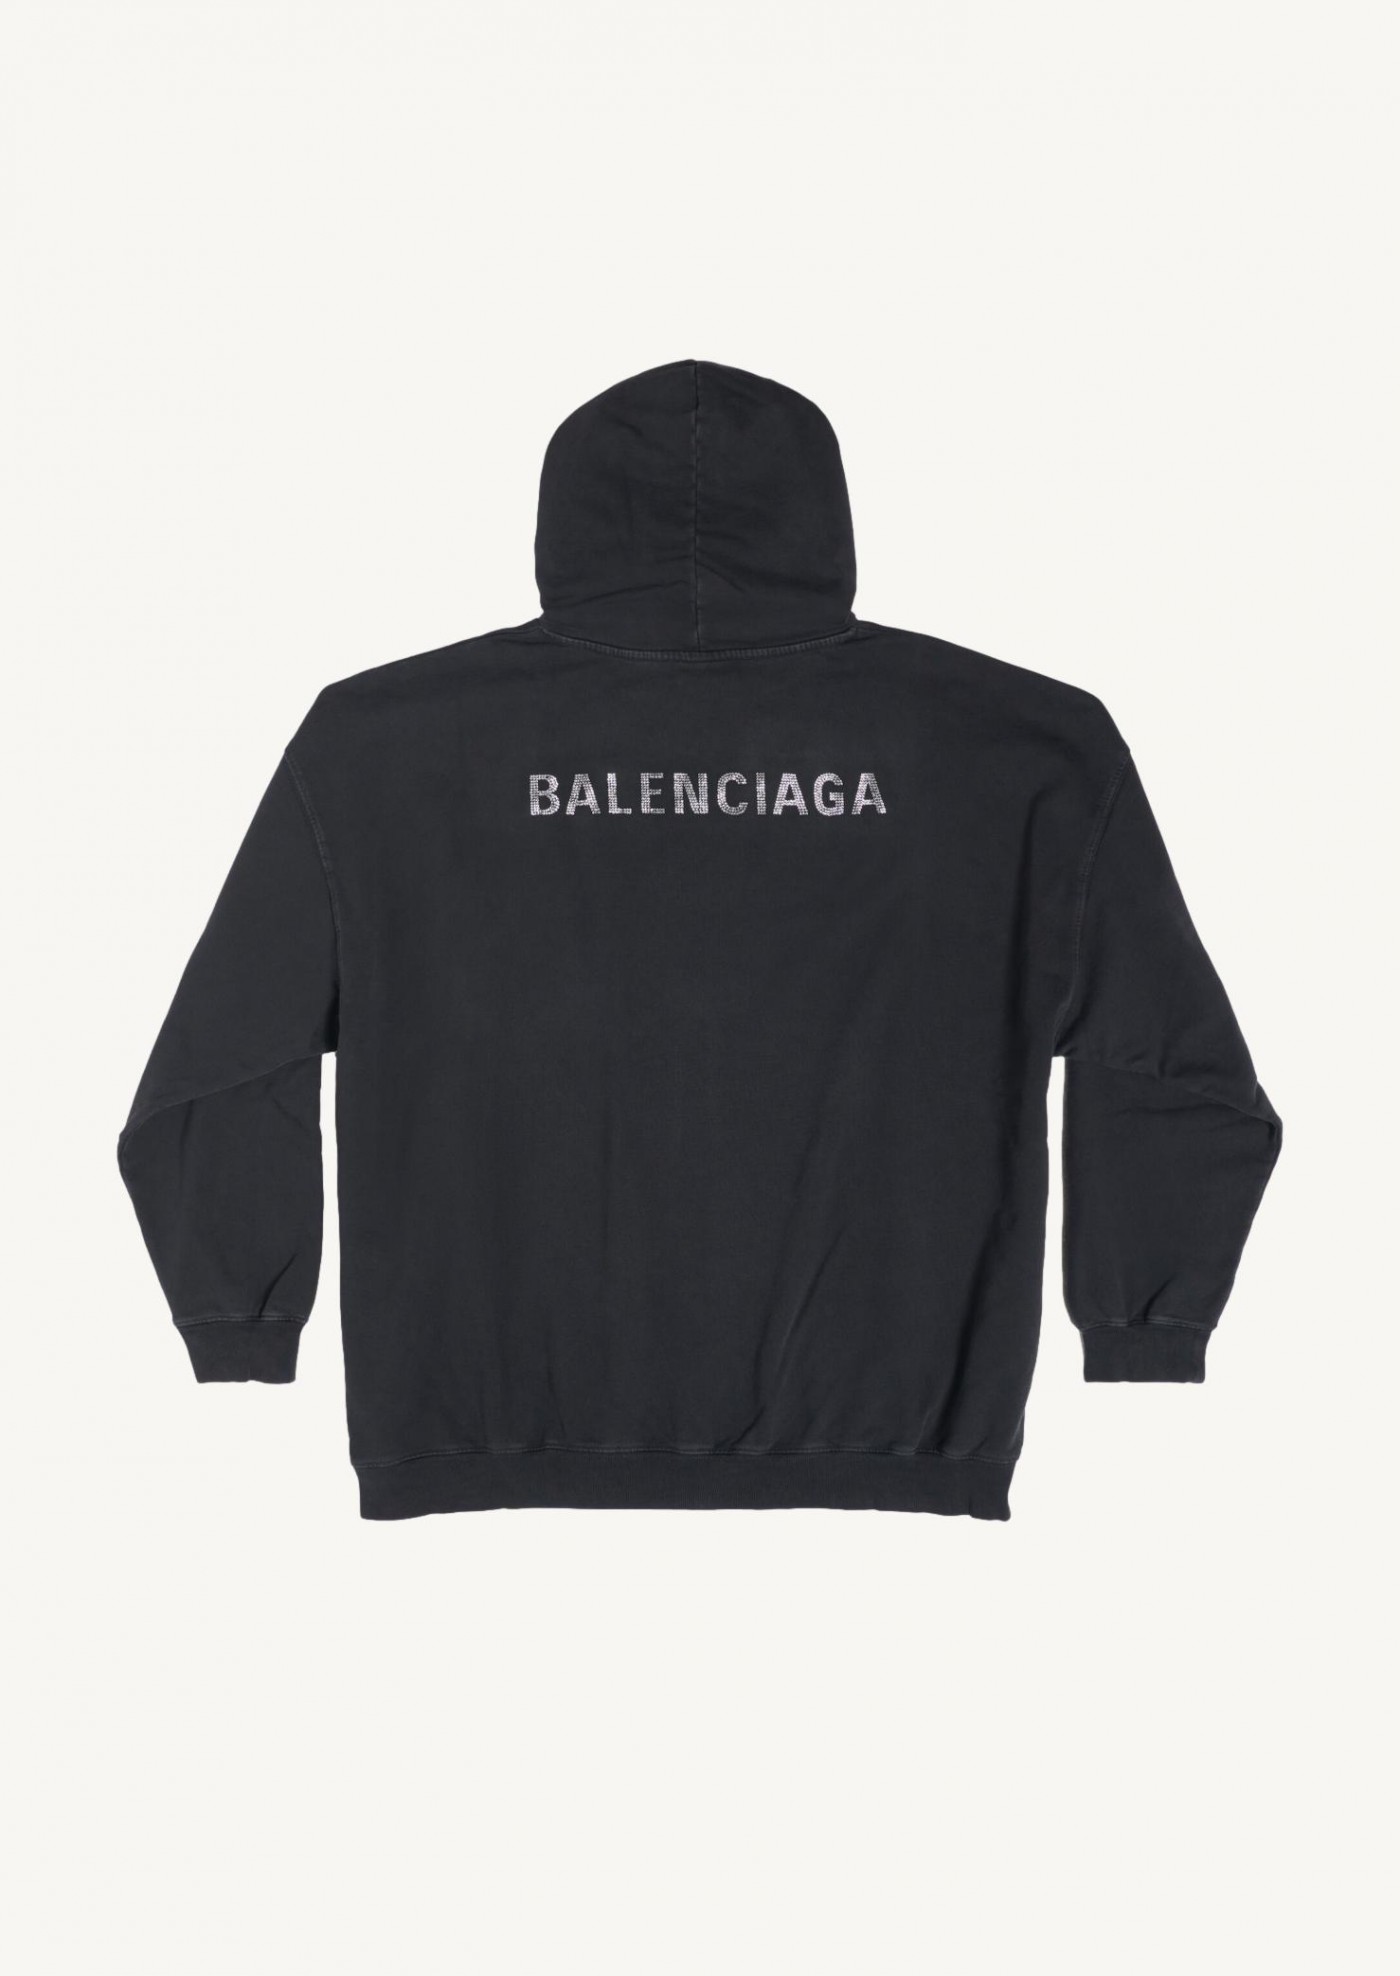 Hoodie Balenciaga Back fit large in black